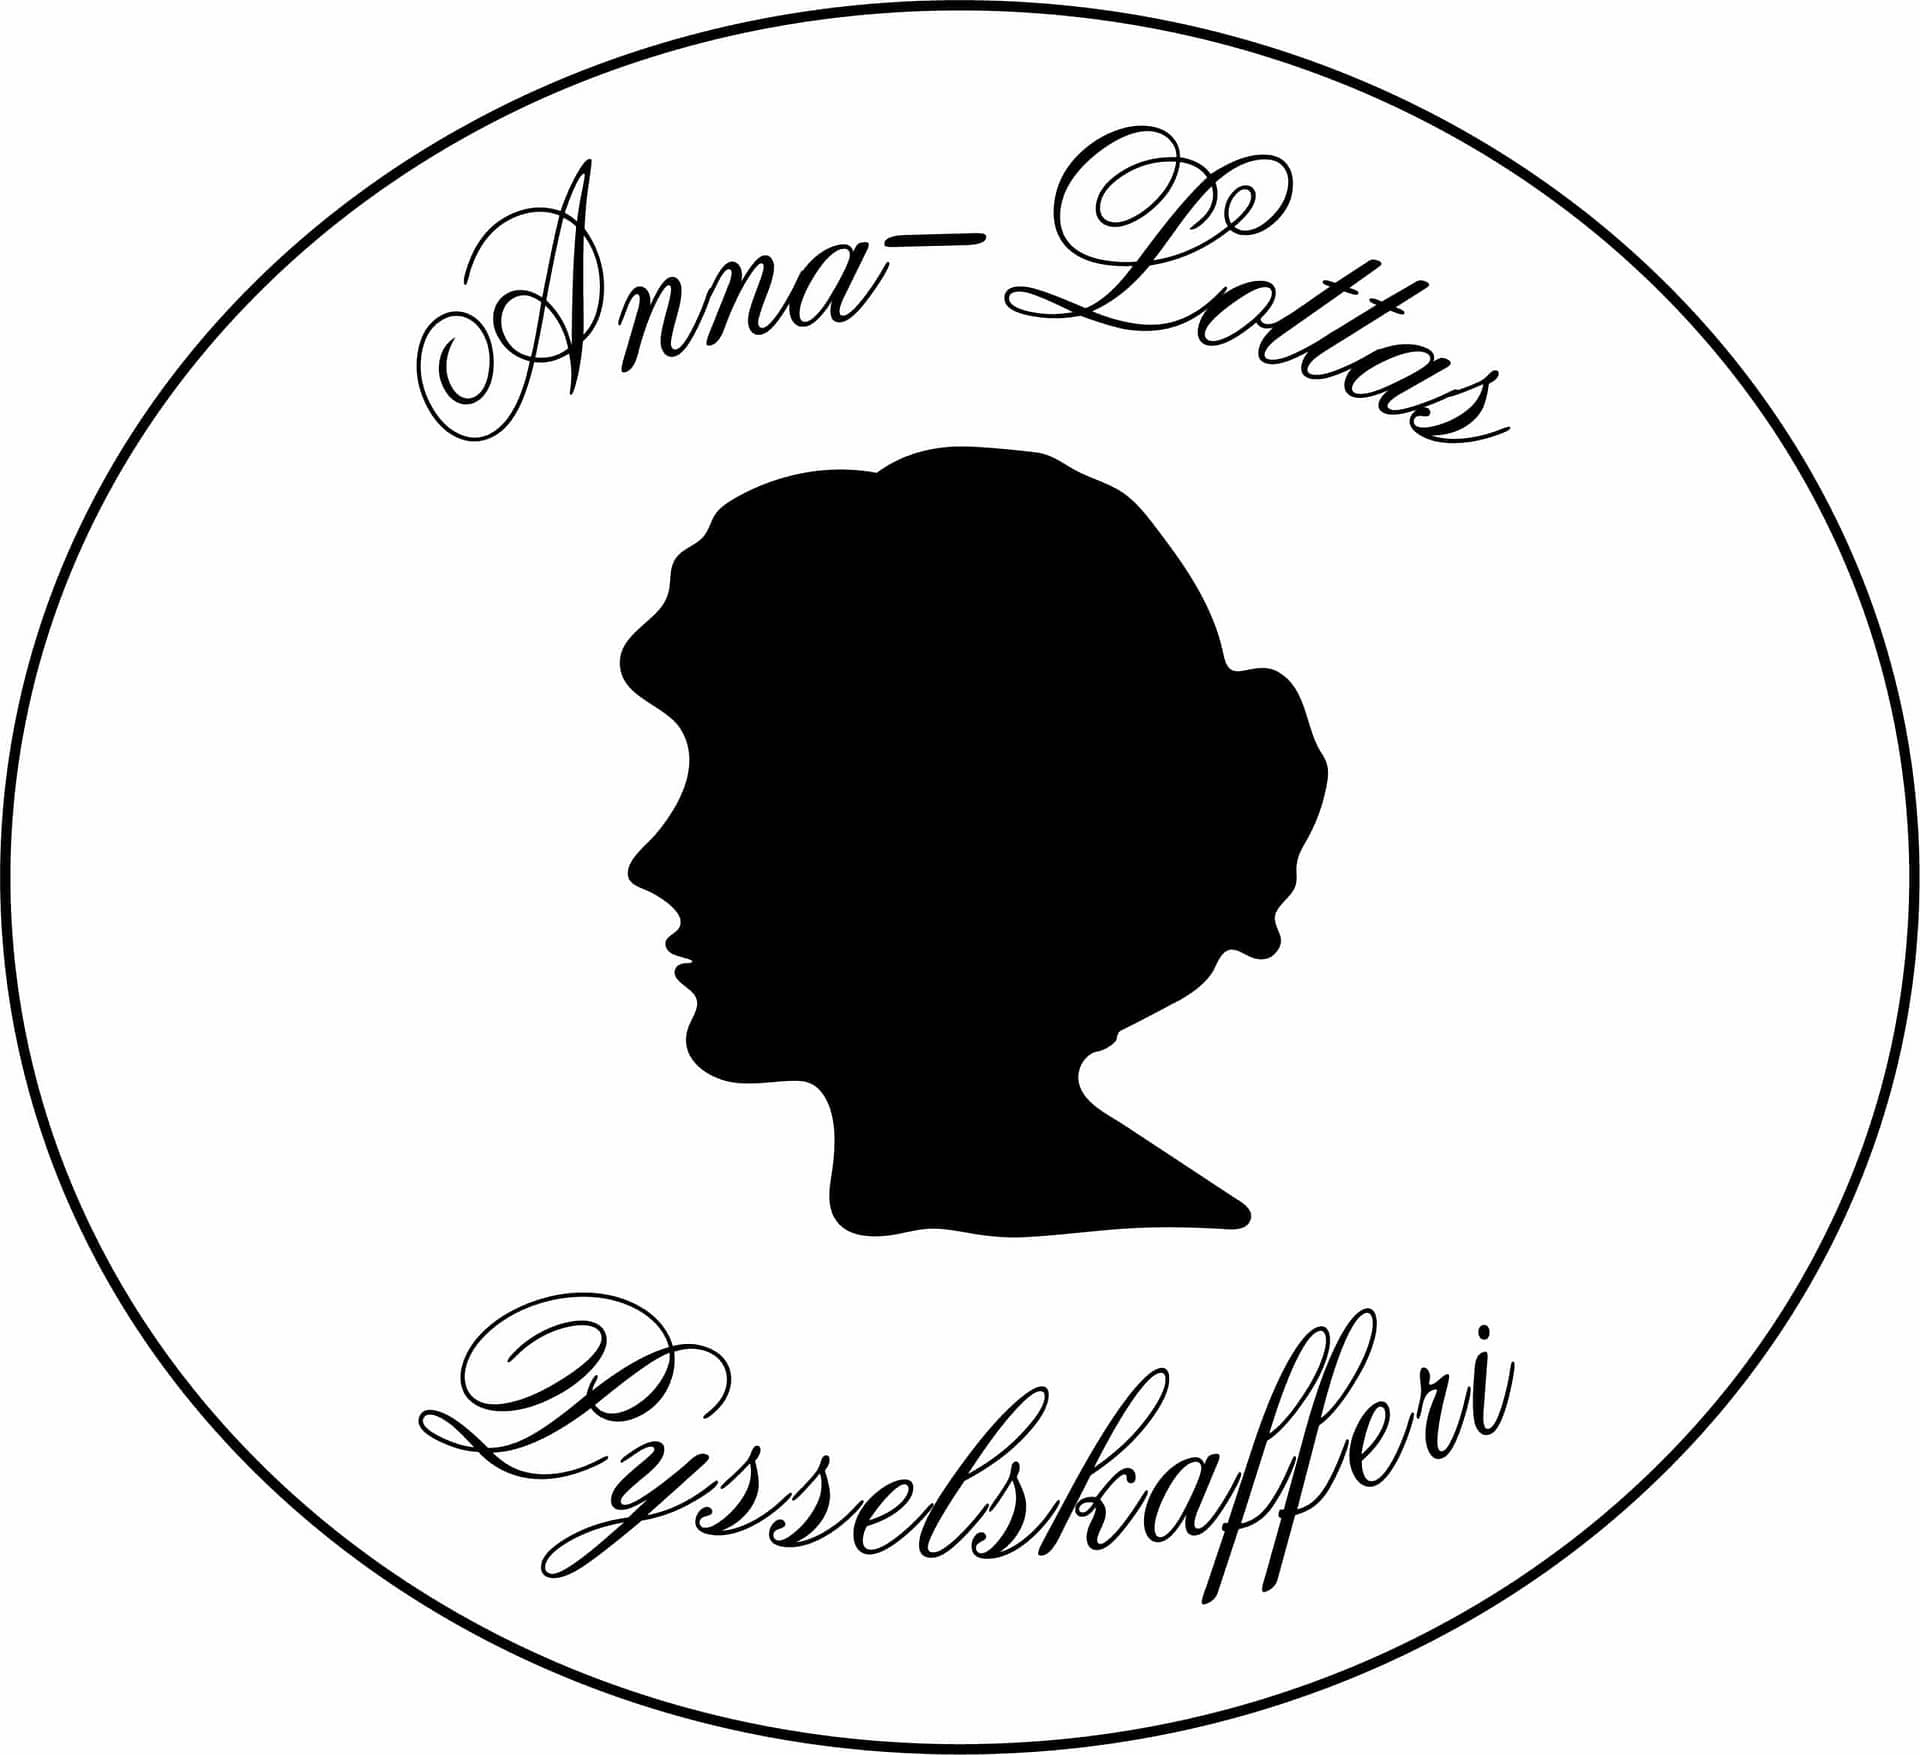 Anna Uhrberg